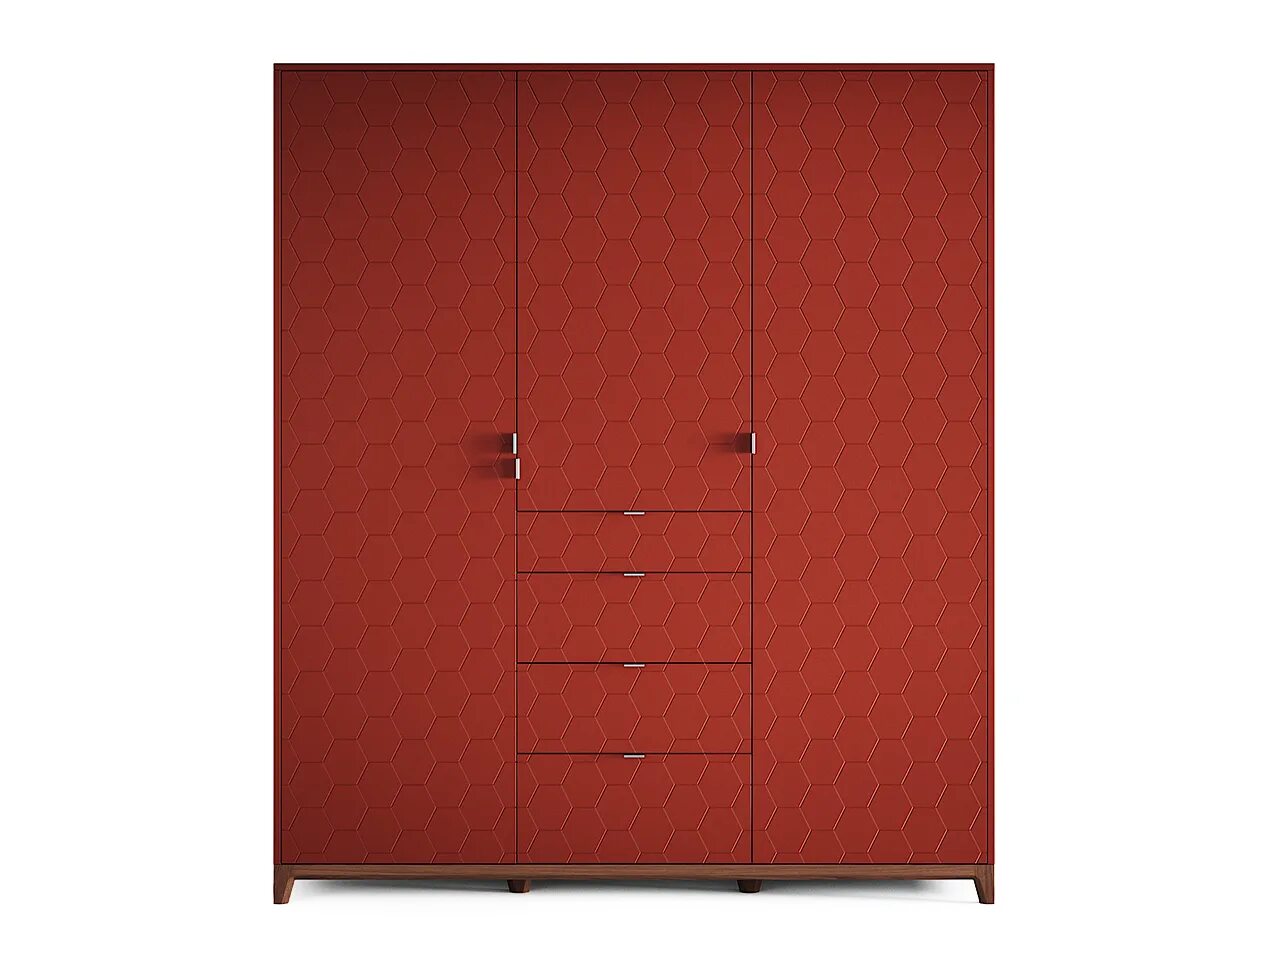 Buy the idea. The idea Case шкаф №3. Красный шкаф. Красный плательный шкаф. Шкаф платяной красный.